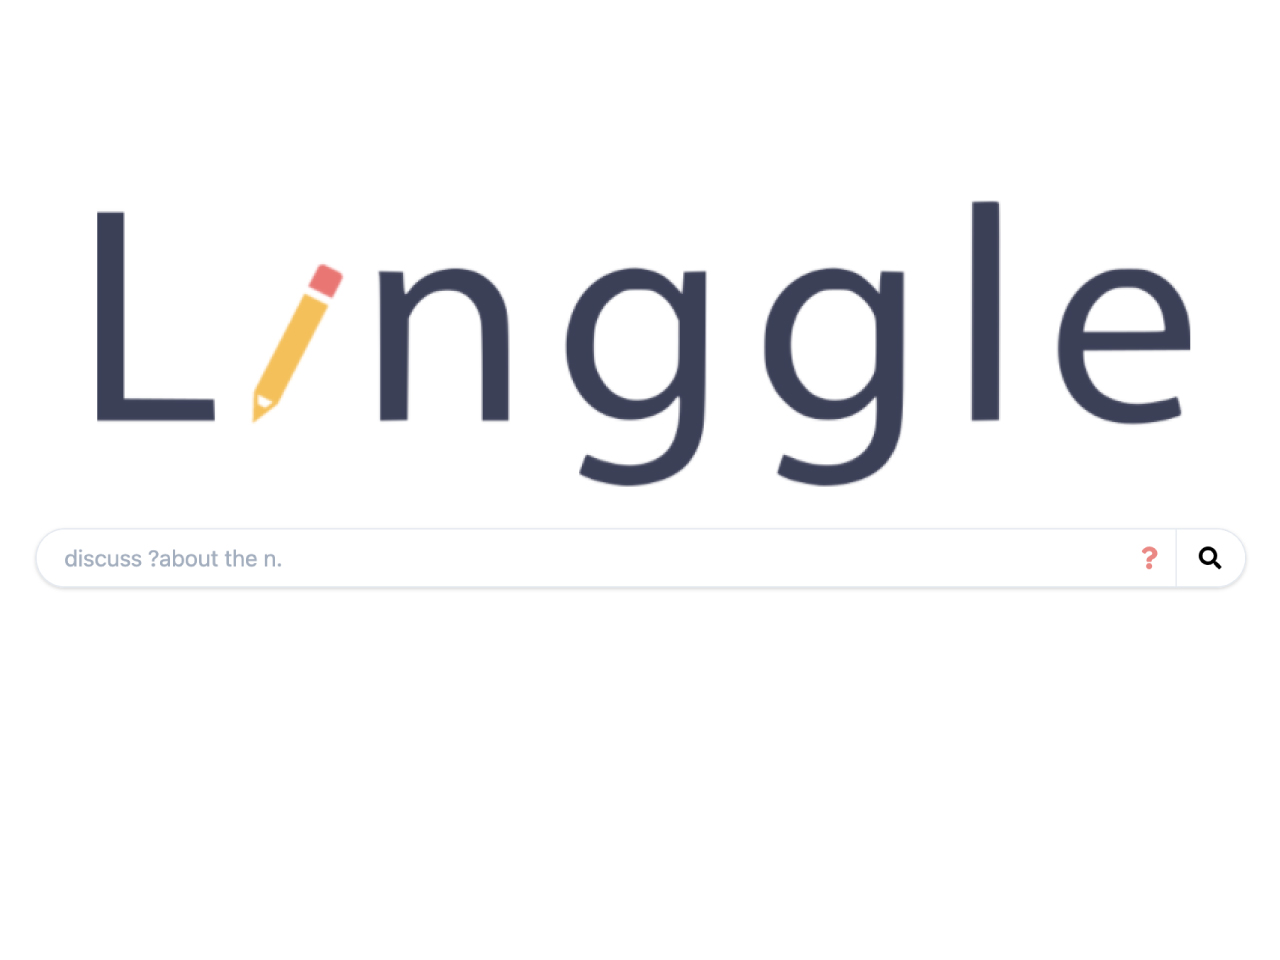 Linggle